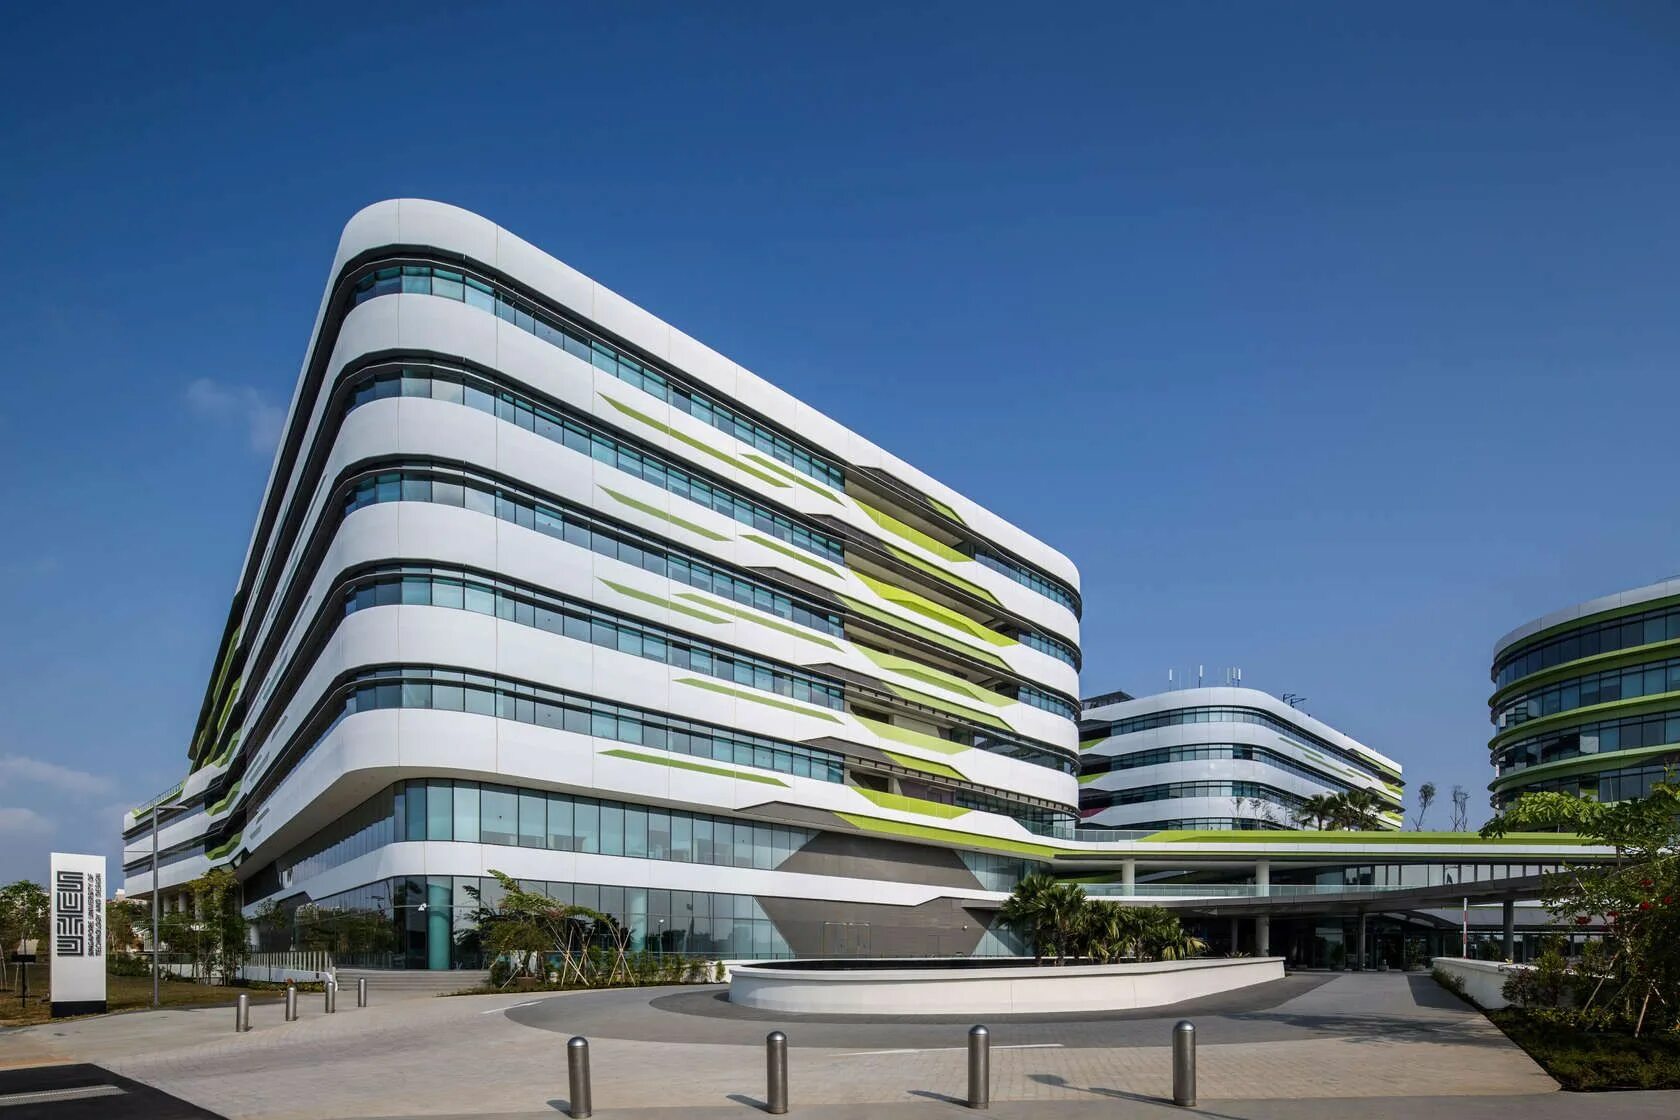 Университетский кампус Сингапур. Архитектурные университеты в Сингапуре. Офисный комплекс Соларис Сингапур. Сингапурский университет архитектура.